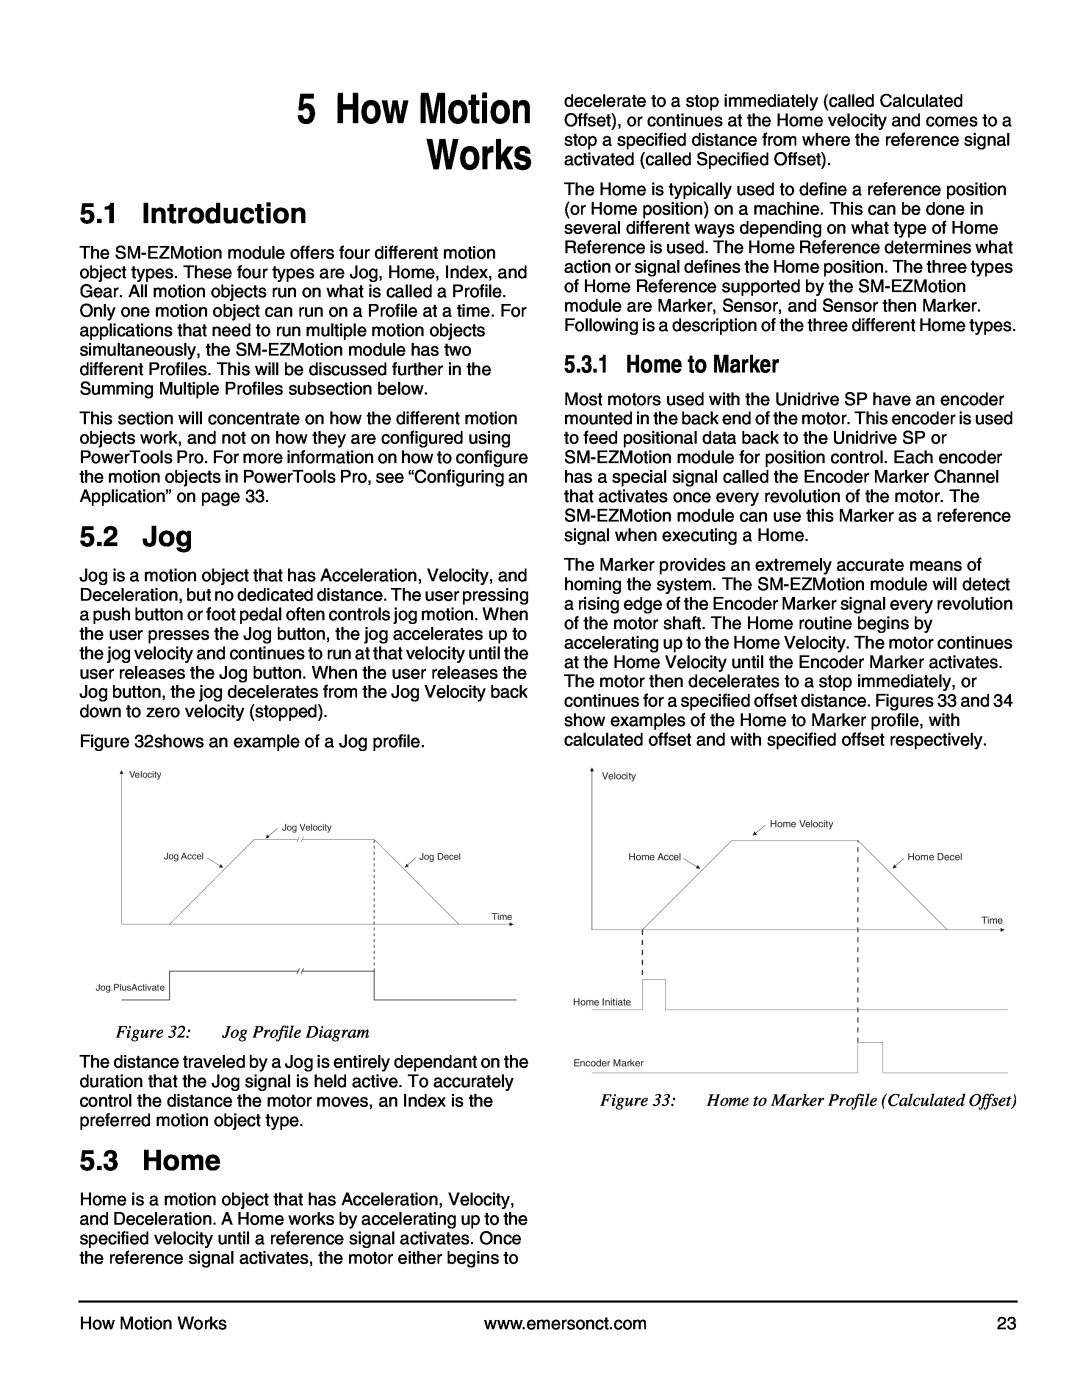 Emerson P/N 400361-00 manual Works, How Motion, Introduction, 5.2 Jog, Home to Marker, Jog Profile Diagram 